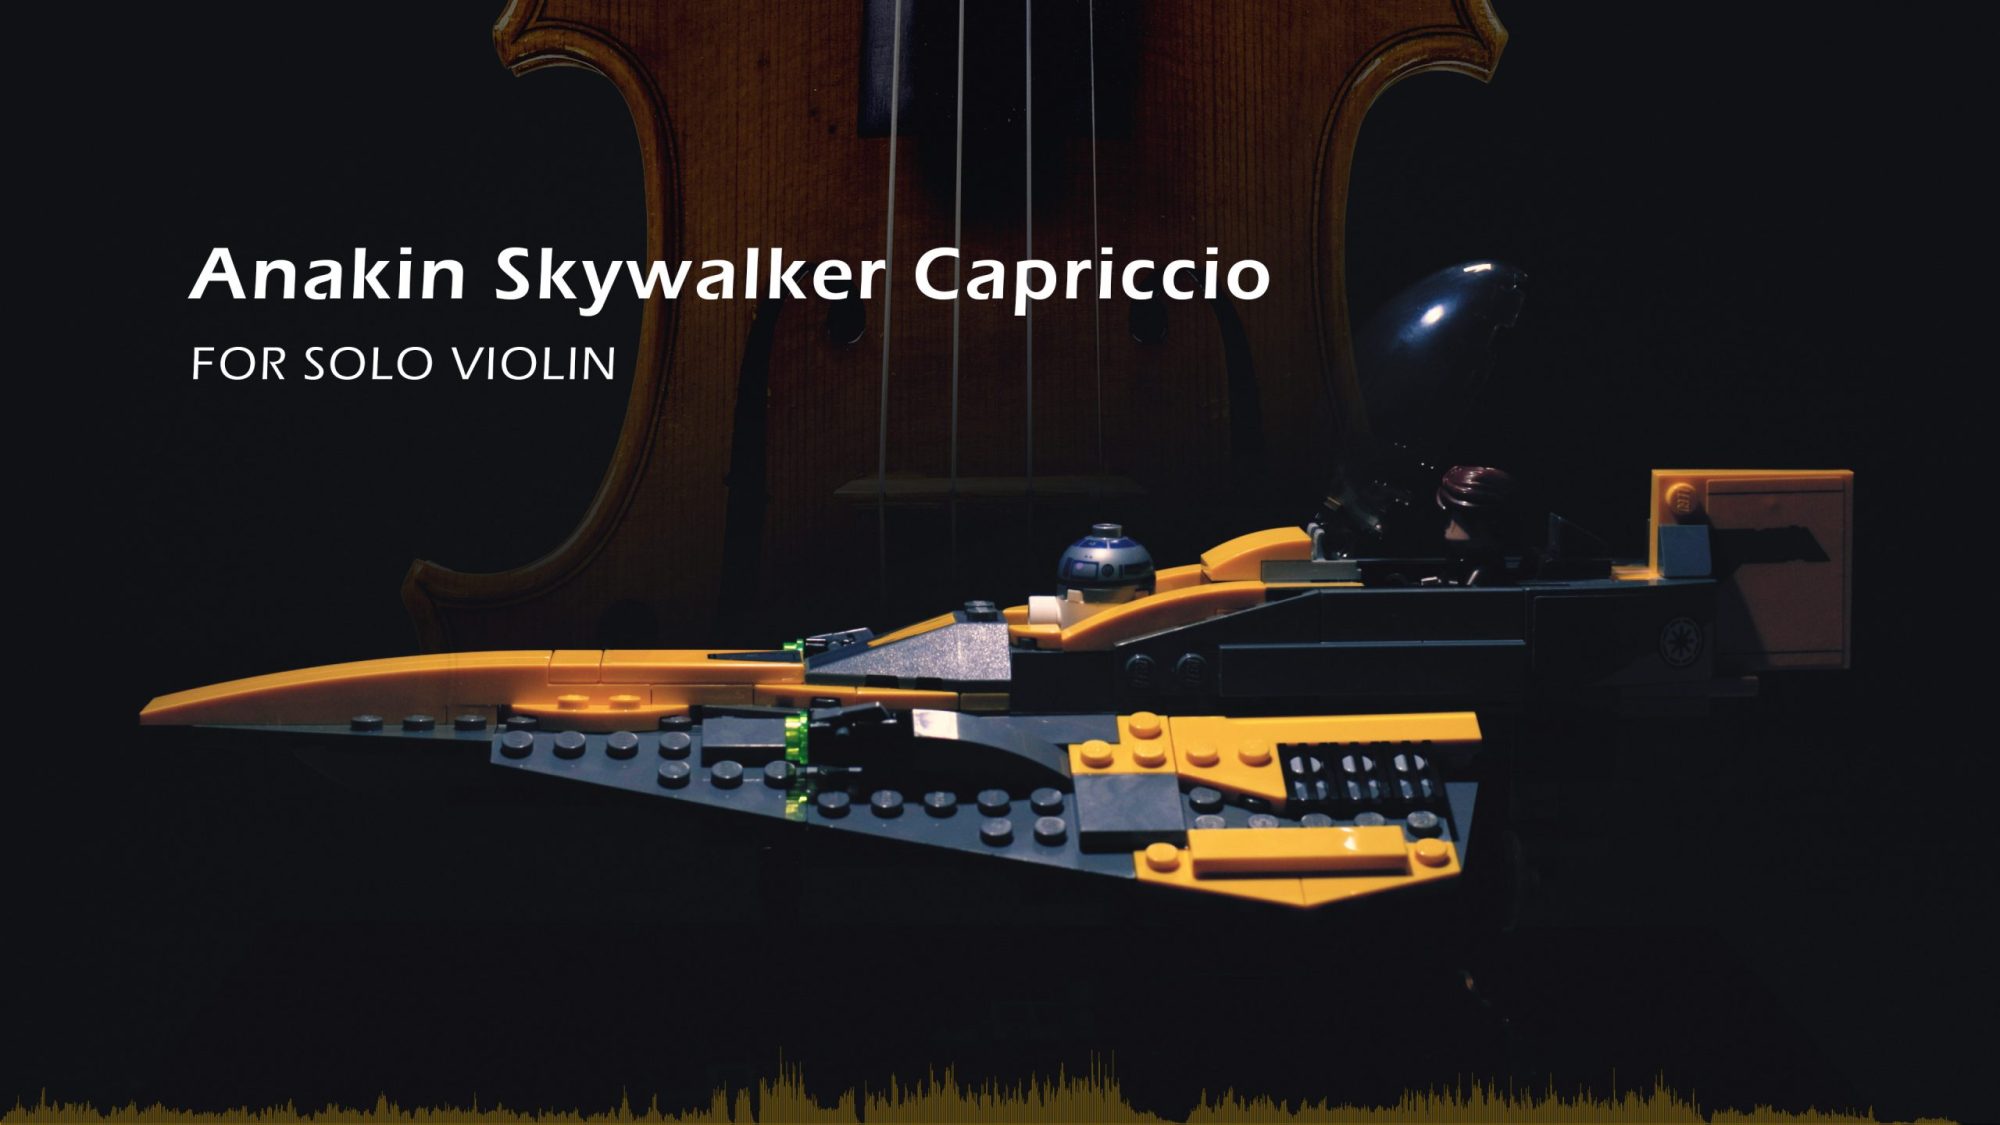 Anakin Skywalker Capriccio Stradivari Violin